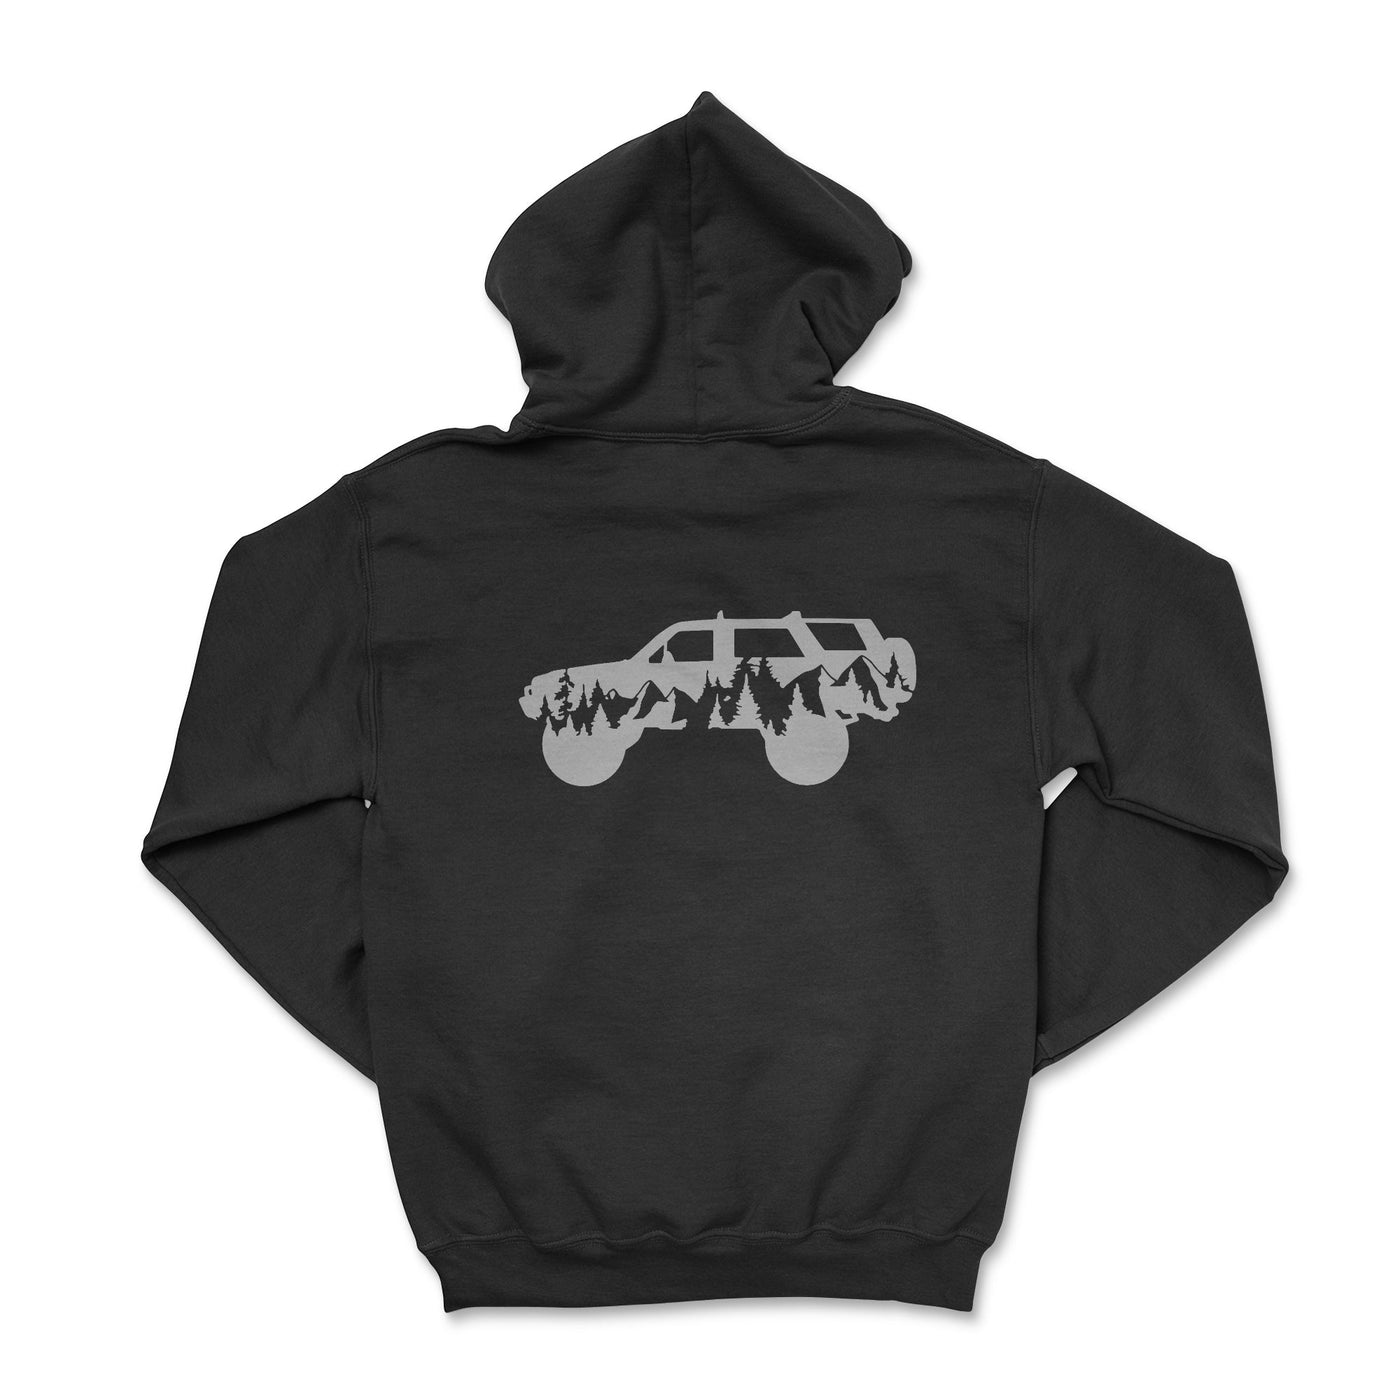 Grey 4Runner Hooded Sweatshirt - Goats Trail Off-Road Apparel Company